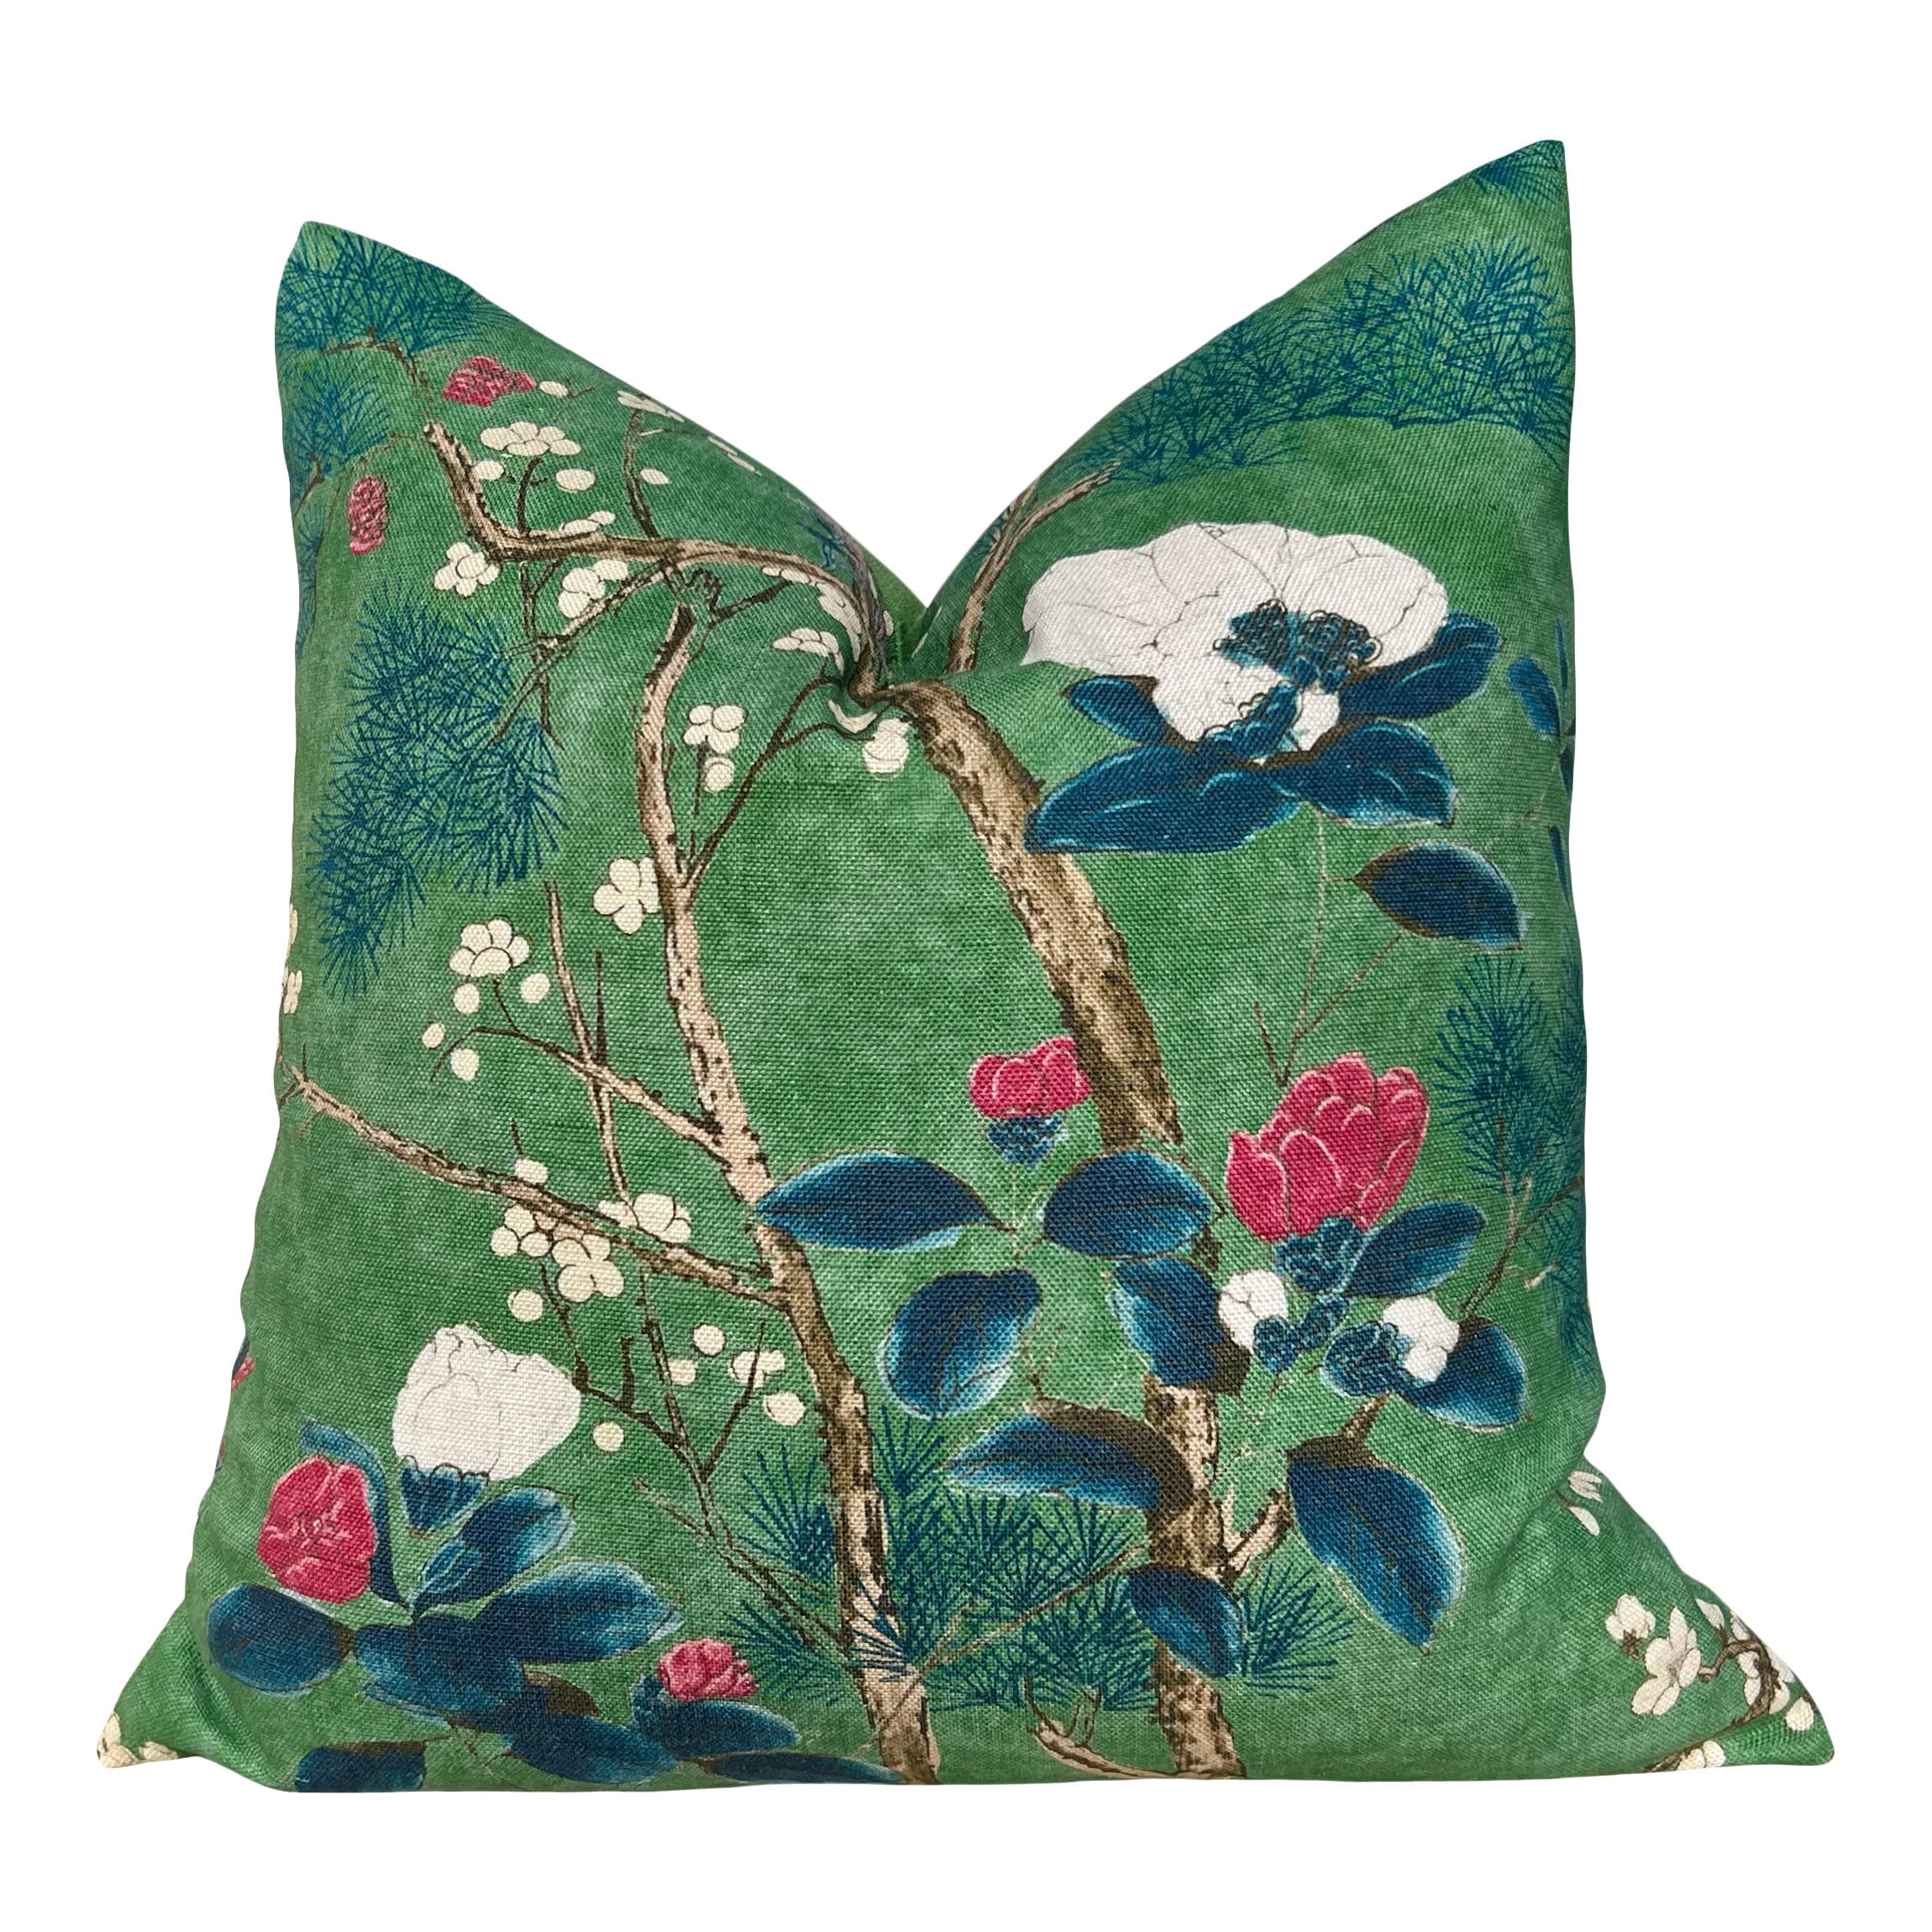 Katsura Pillow in Emerald Green. Designer Pillows, High End Floral Pillow Case, Euro Sham Cover, Accent Lumbar Pillows, Chinoiserie Pillows